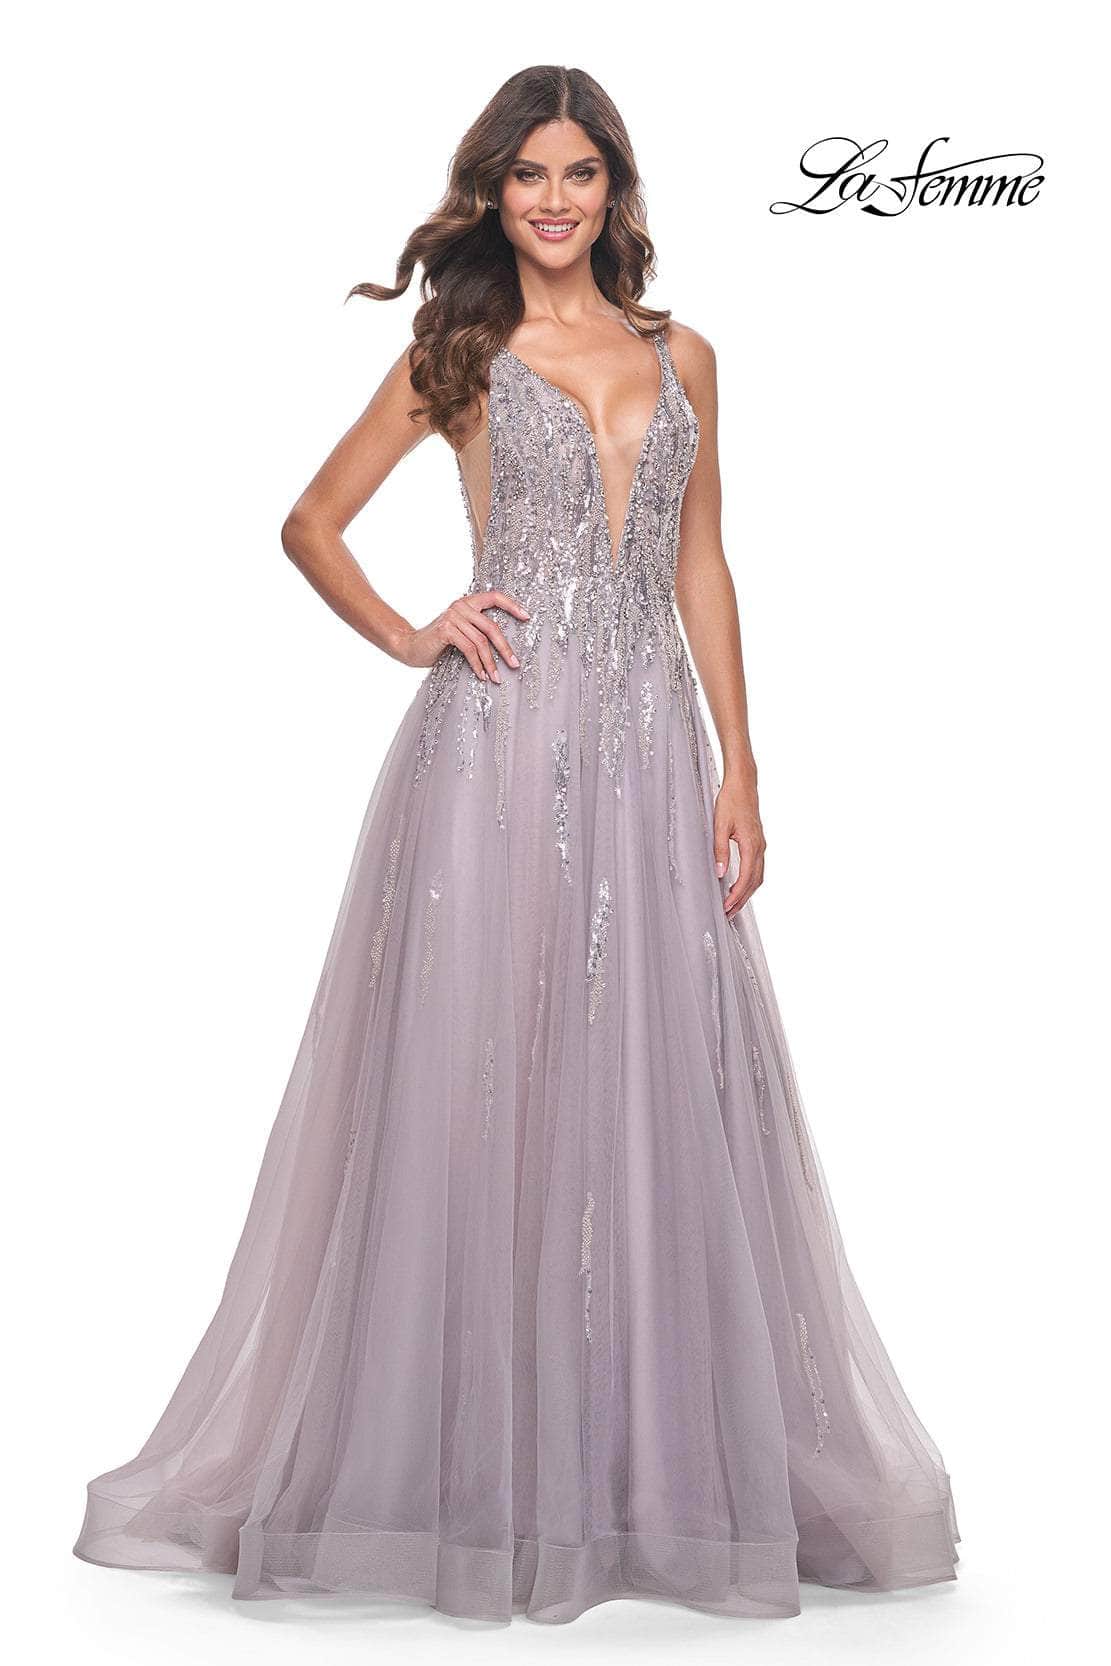 La Femme 31995 - Plunging V-Neck Sequin Tulle Prom Gown
